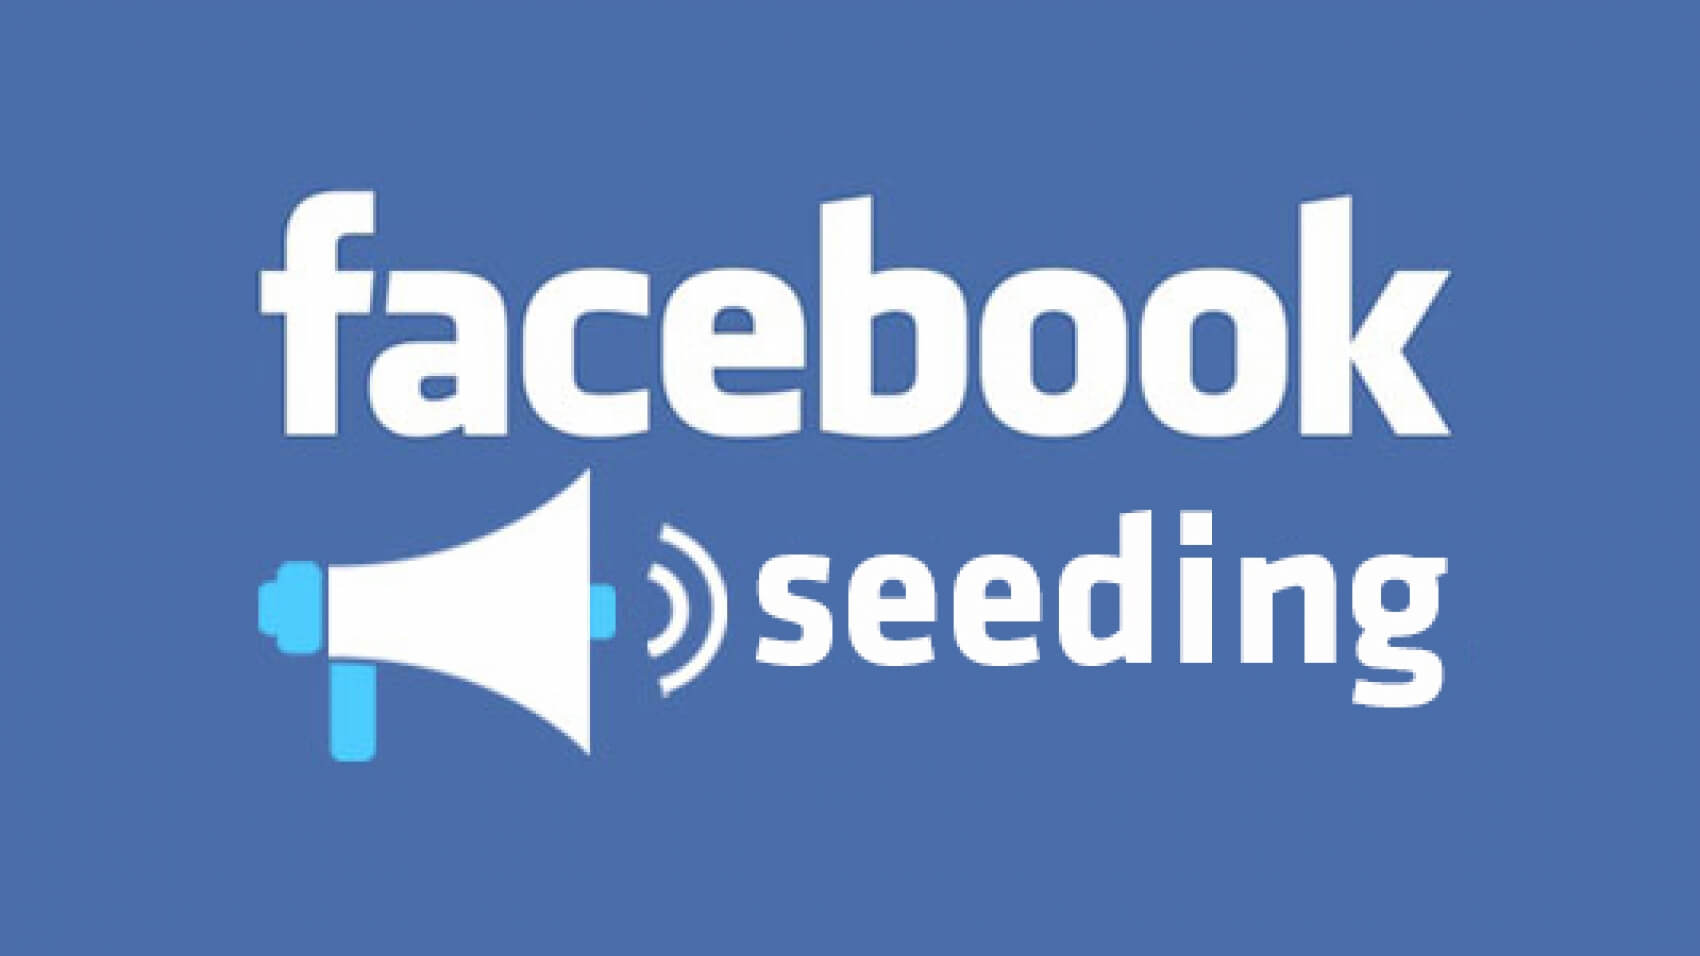 Top 4 dịch vụ seeding Facebook được nhiều người sử dụng